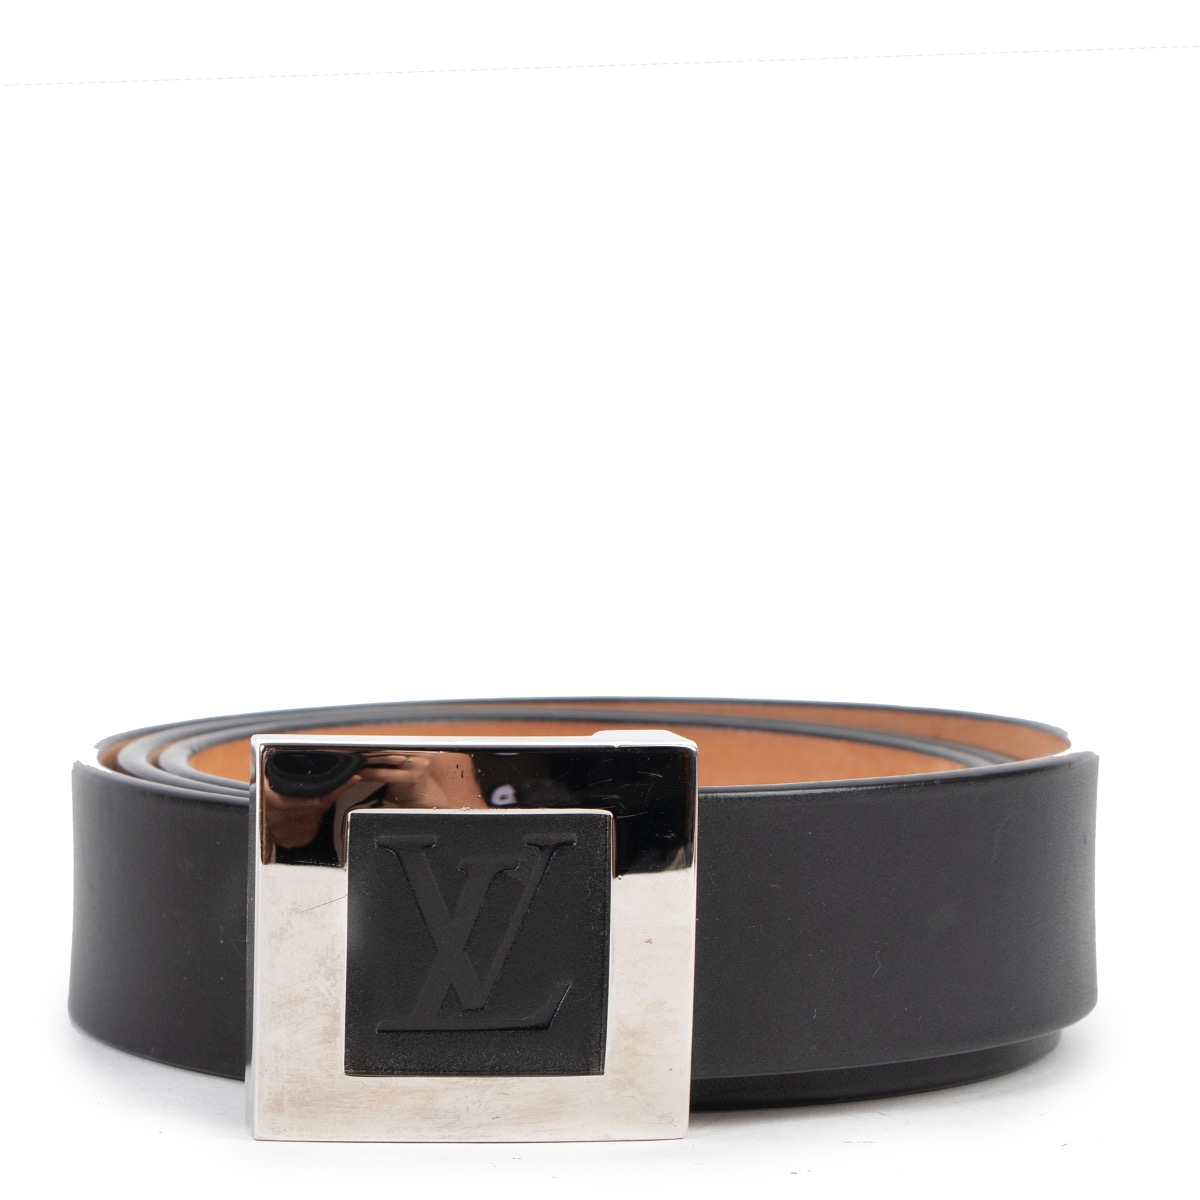 Louis Vuitton - Authenticated Belt - Leather Black for Men, Never Worn